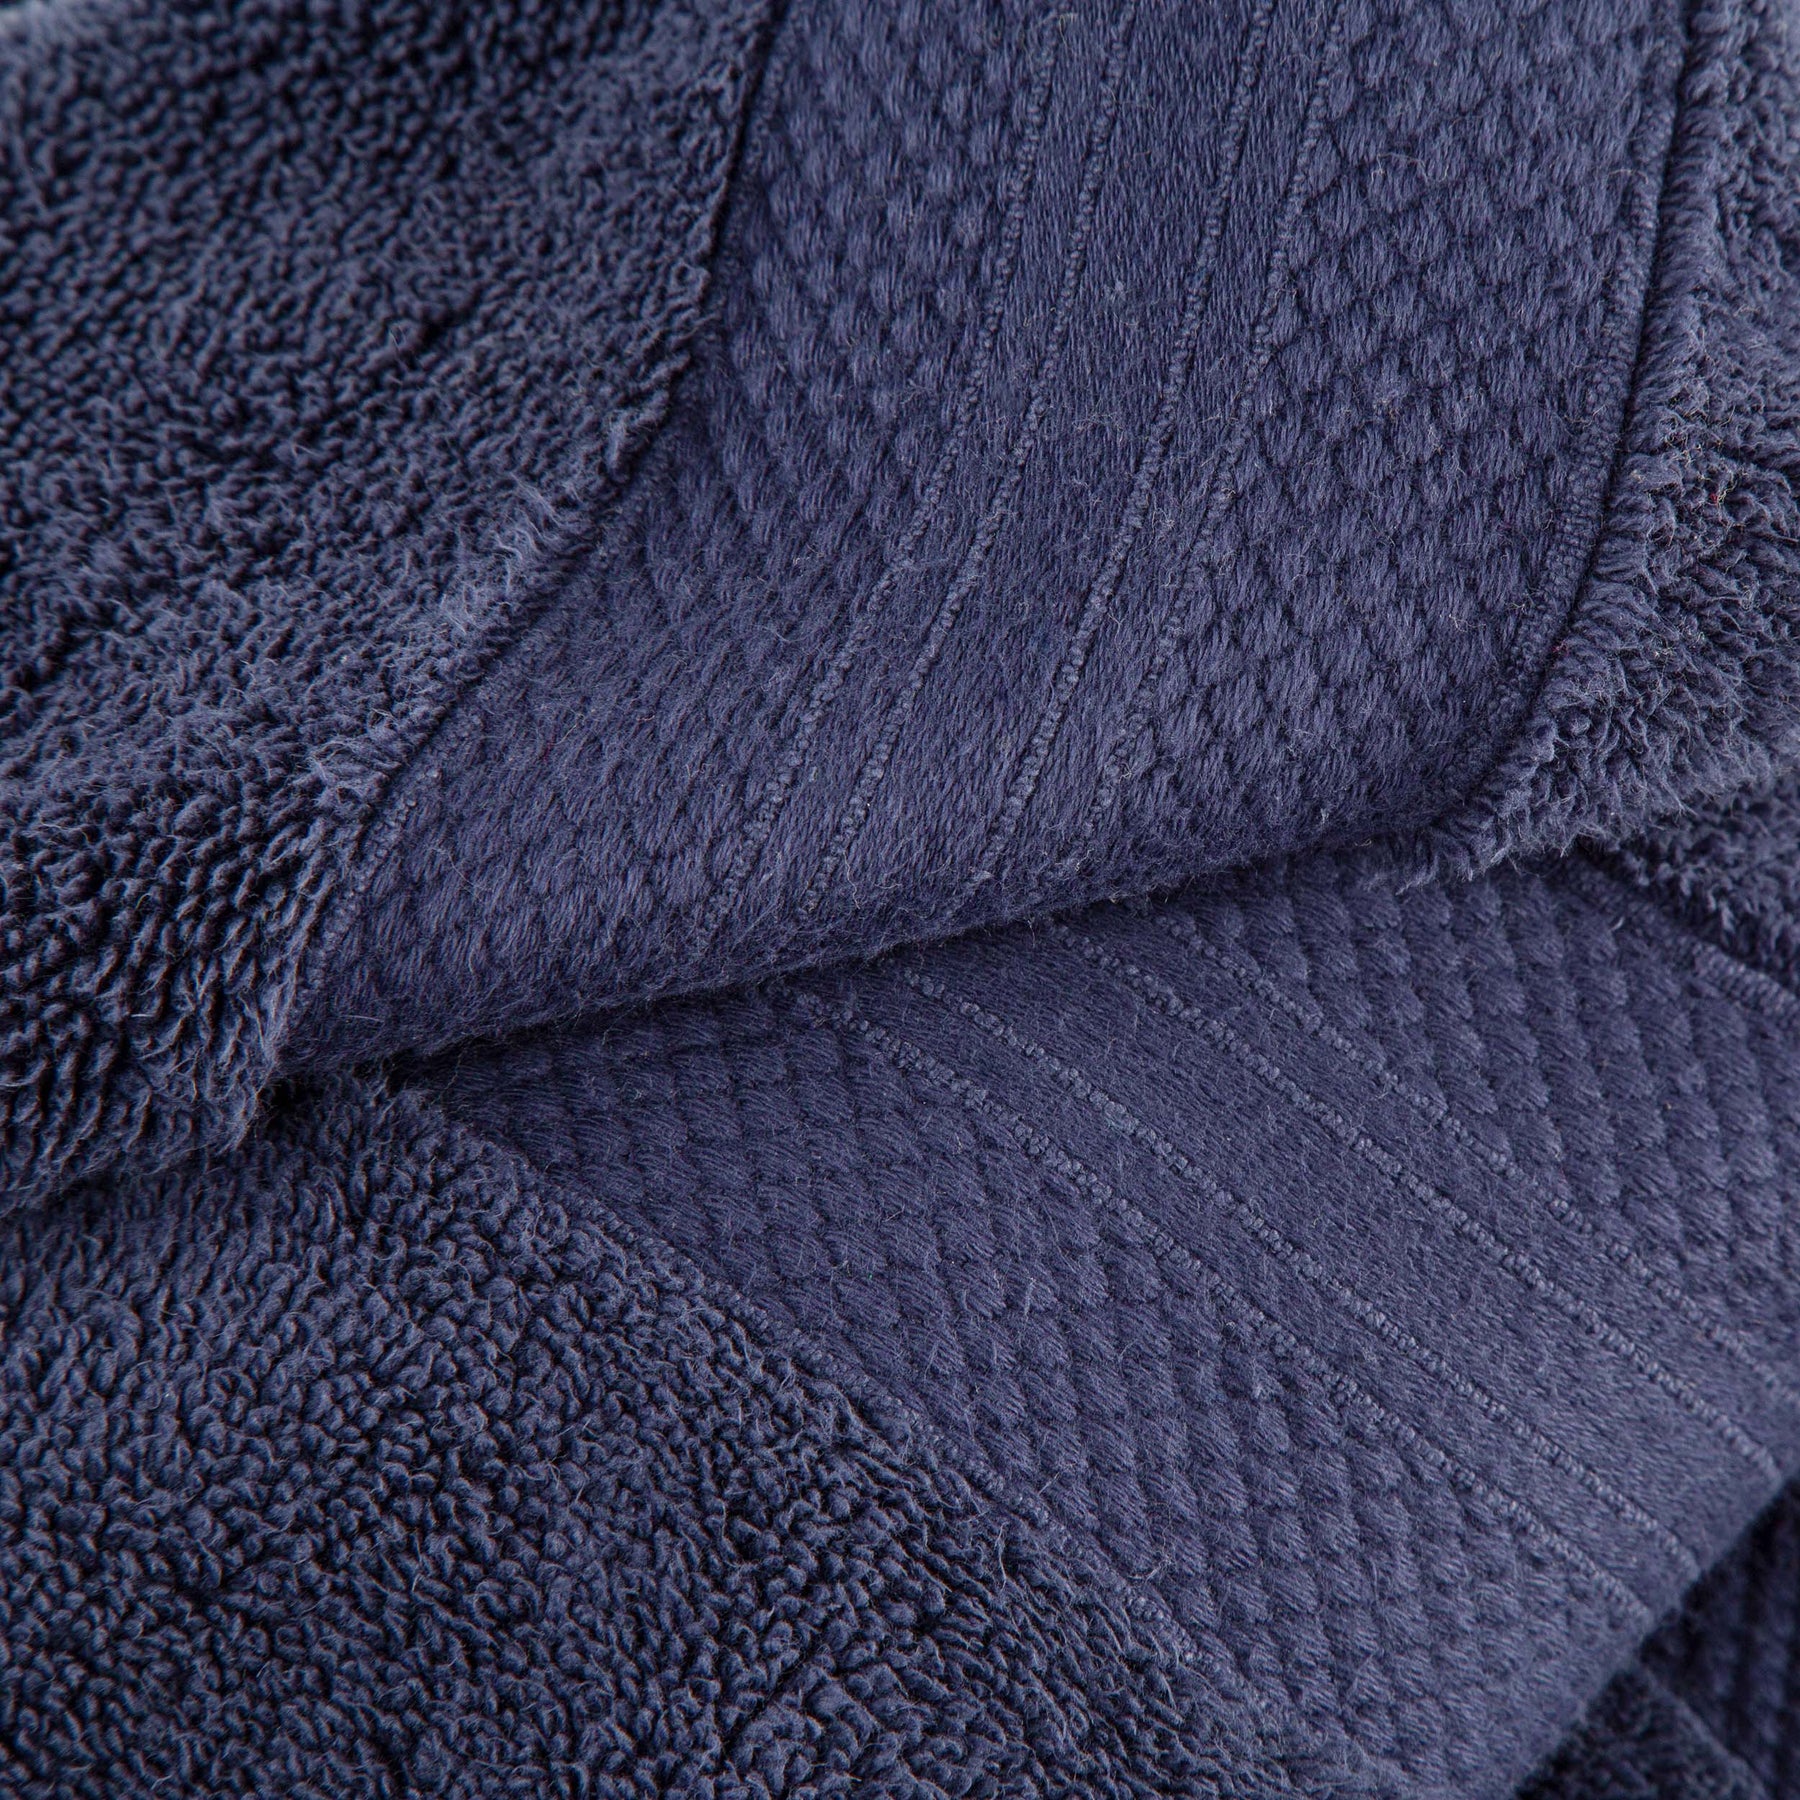 Superior Premium Turkish-Cotton Assorted Towel Set - Crown Blue